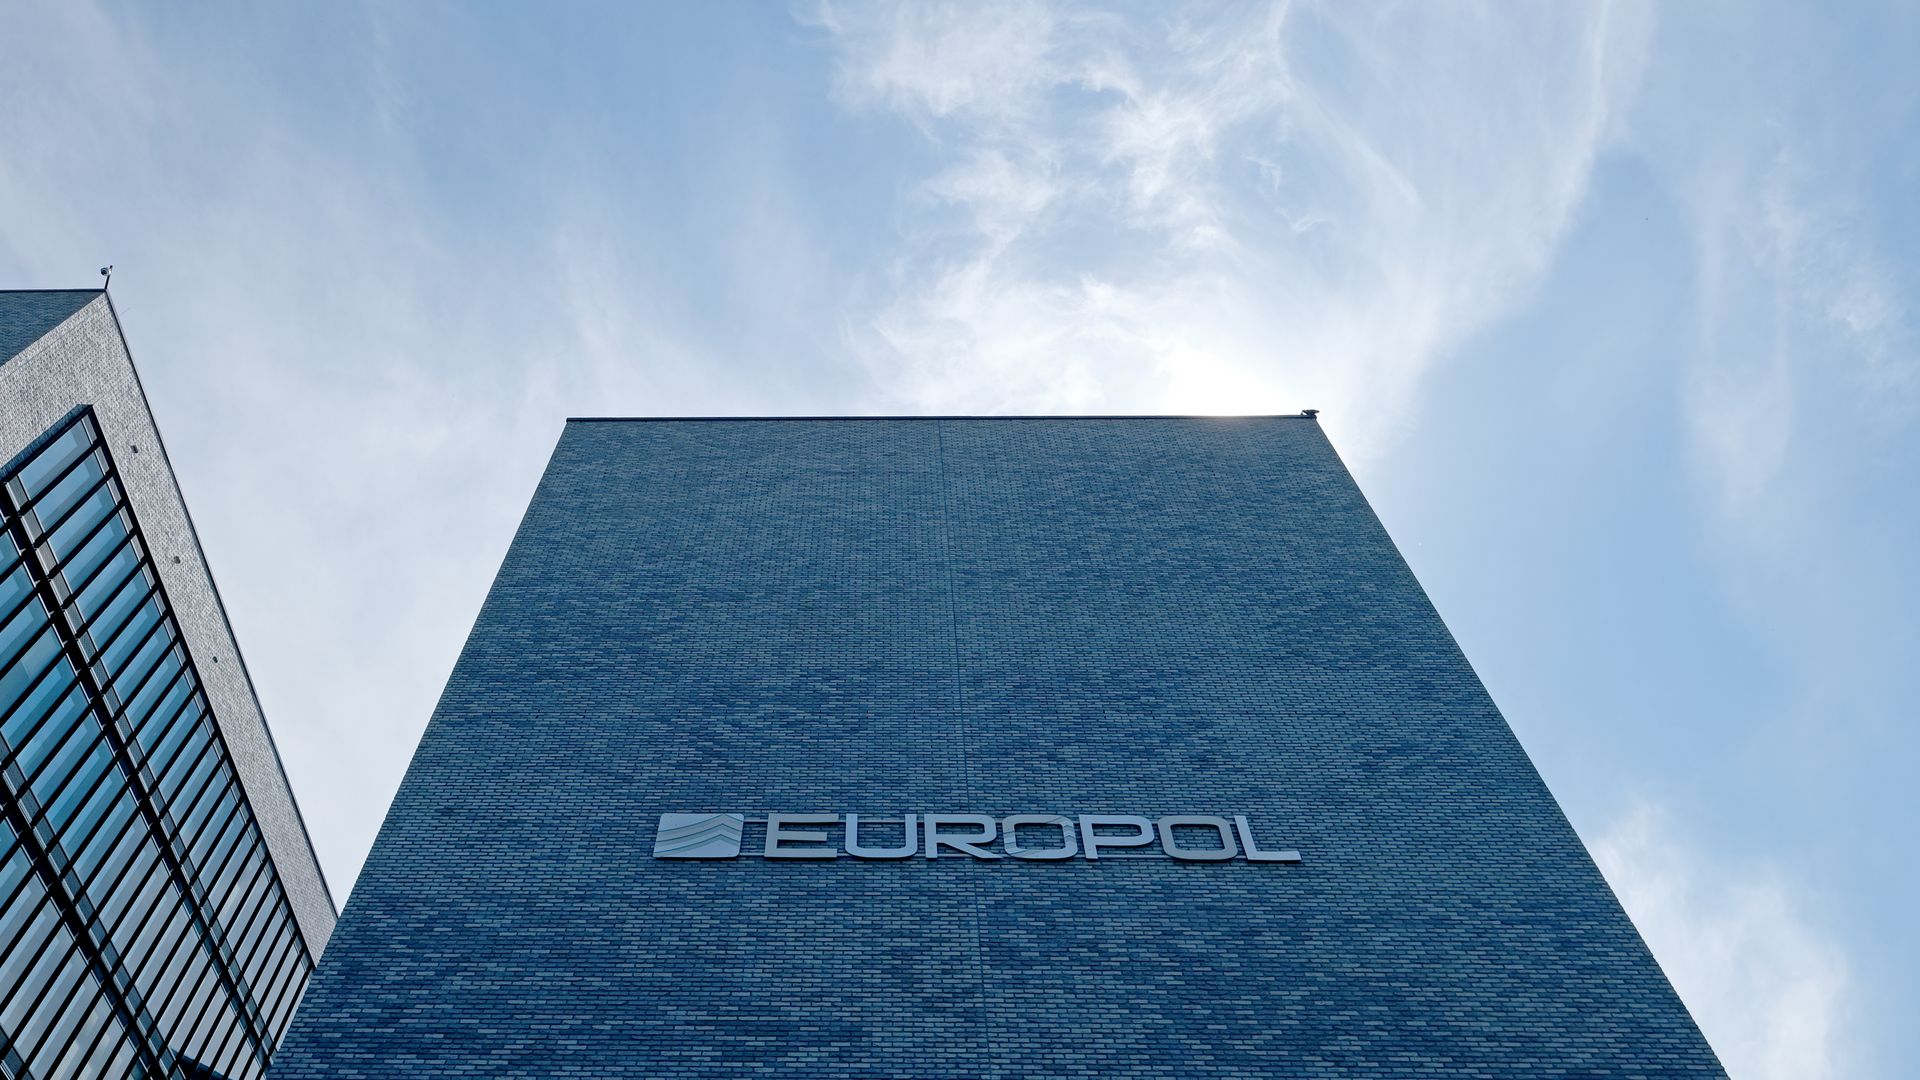 European Union's law enforcement agency's headquarters in The Hague, Netherlands.